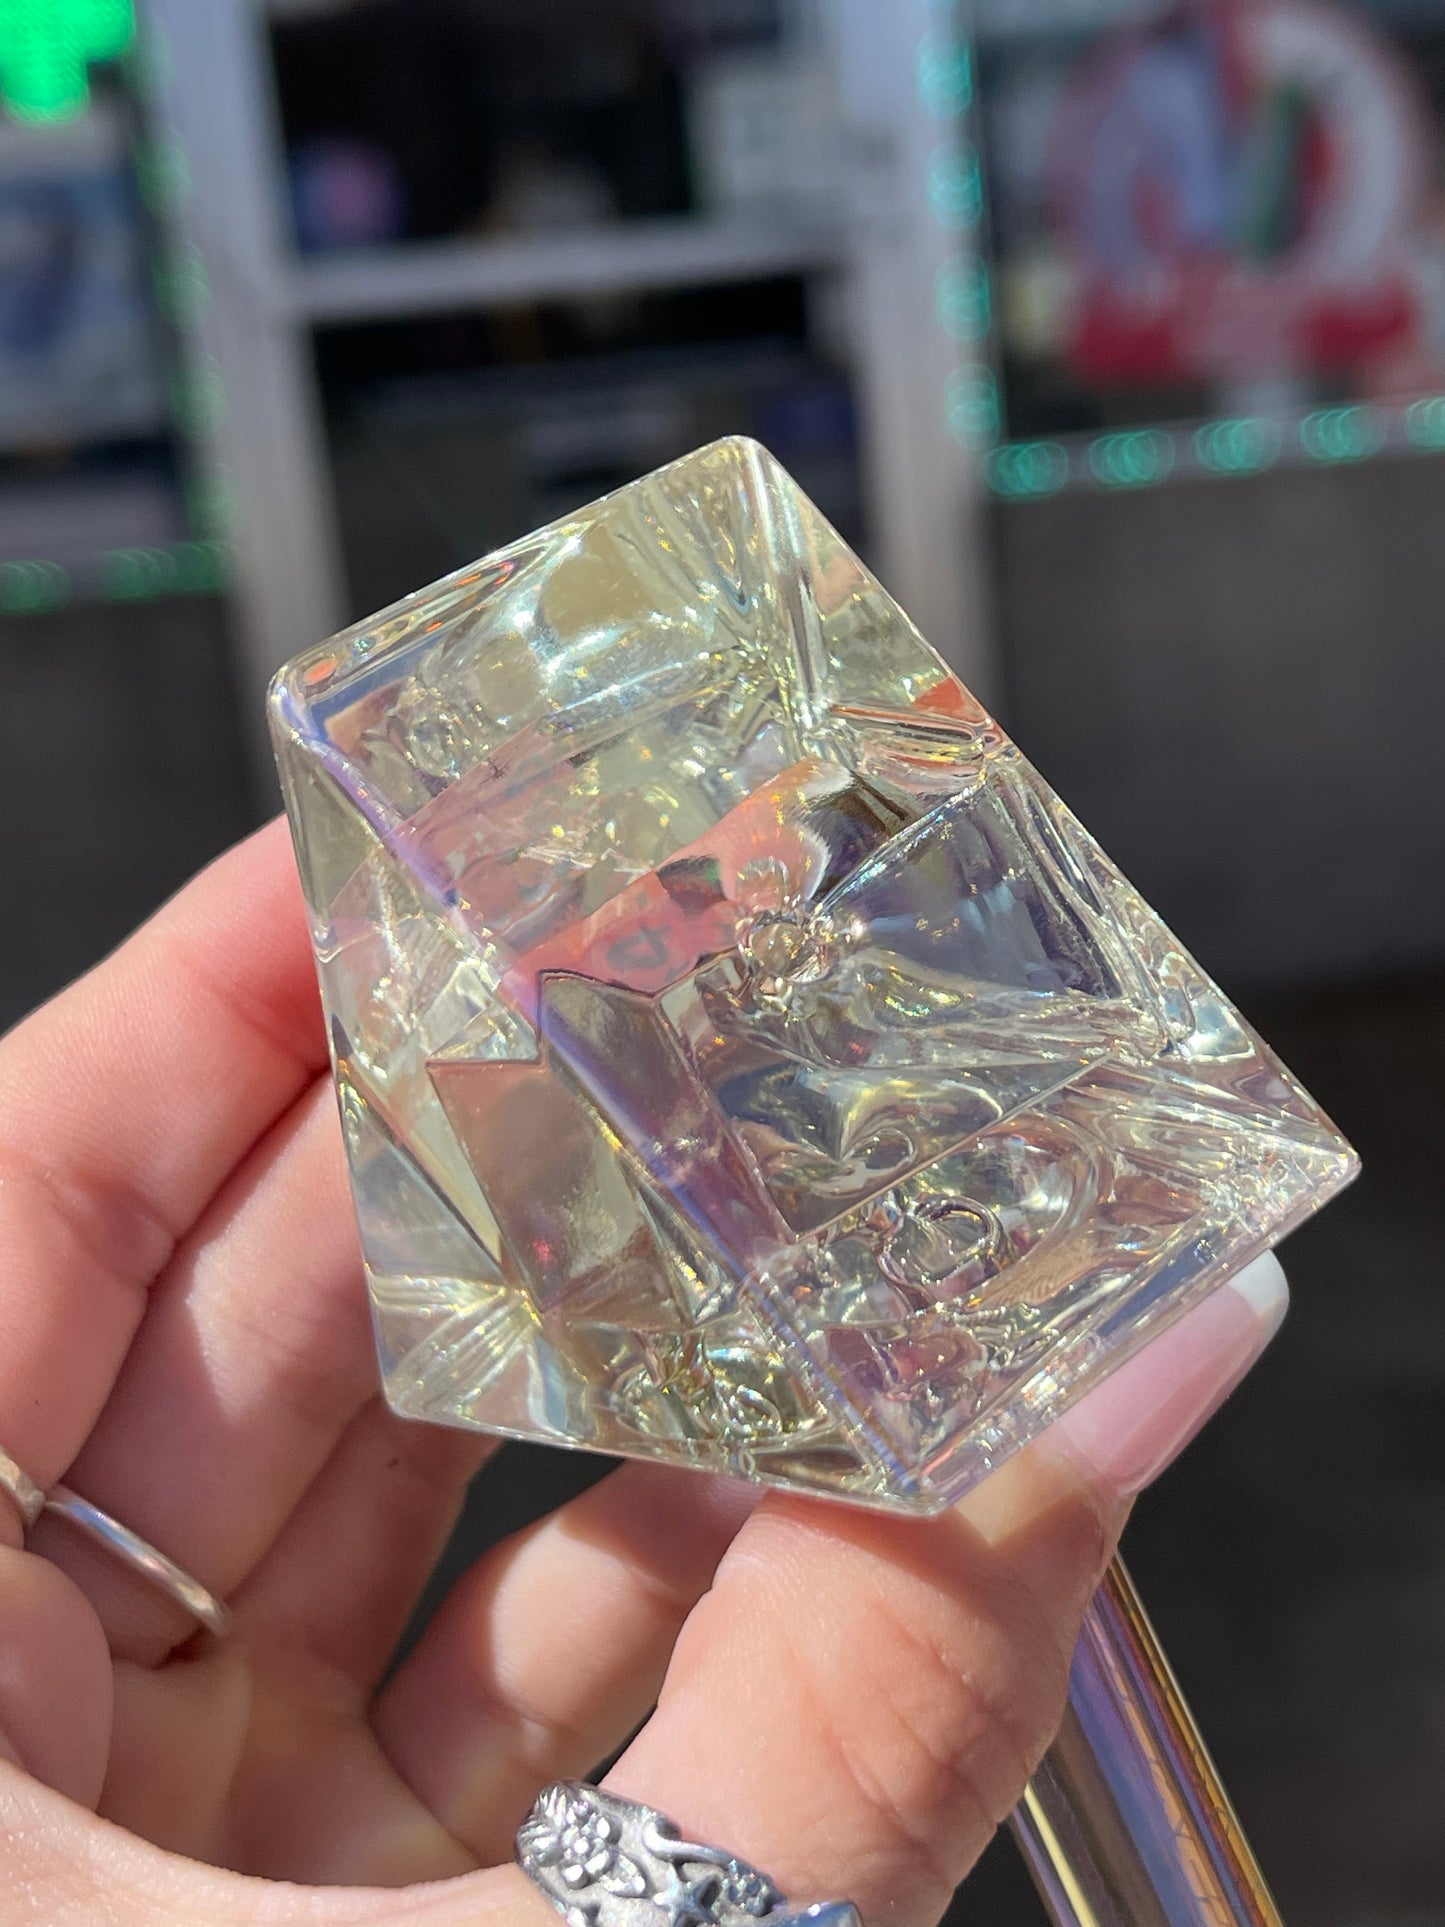 Redeye Prism Fumed Glass Handpipe